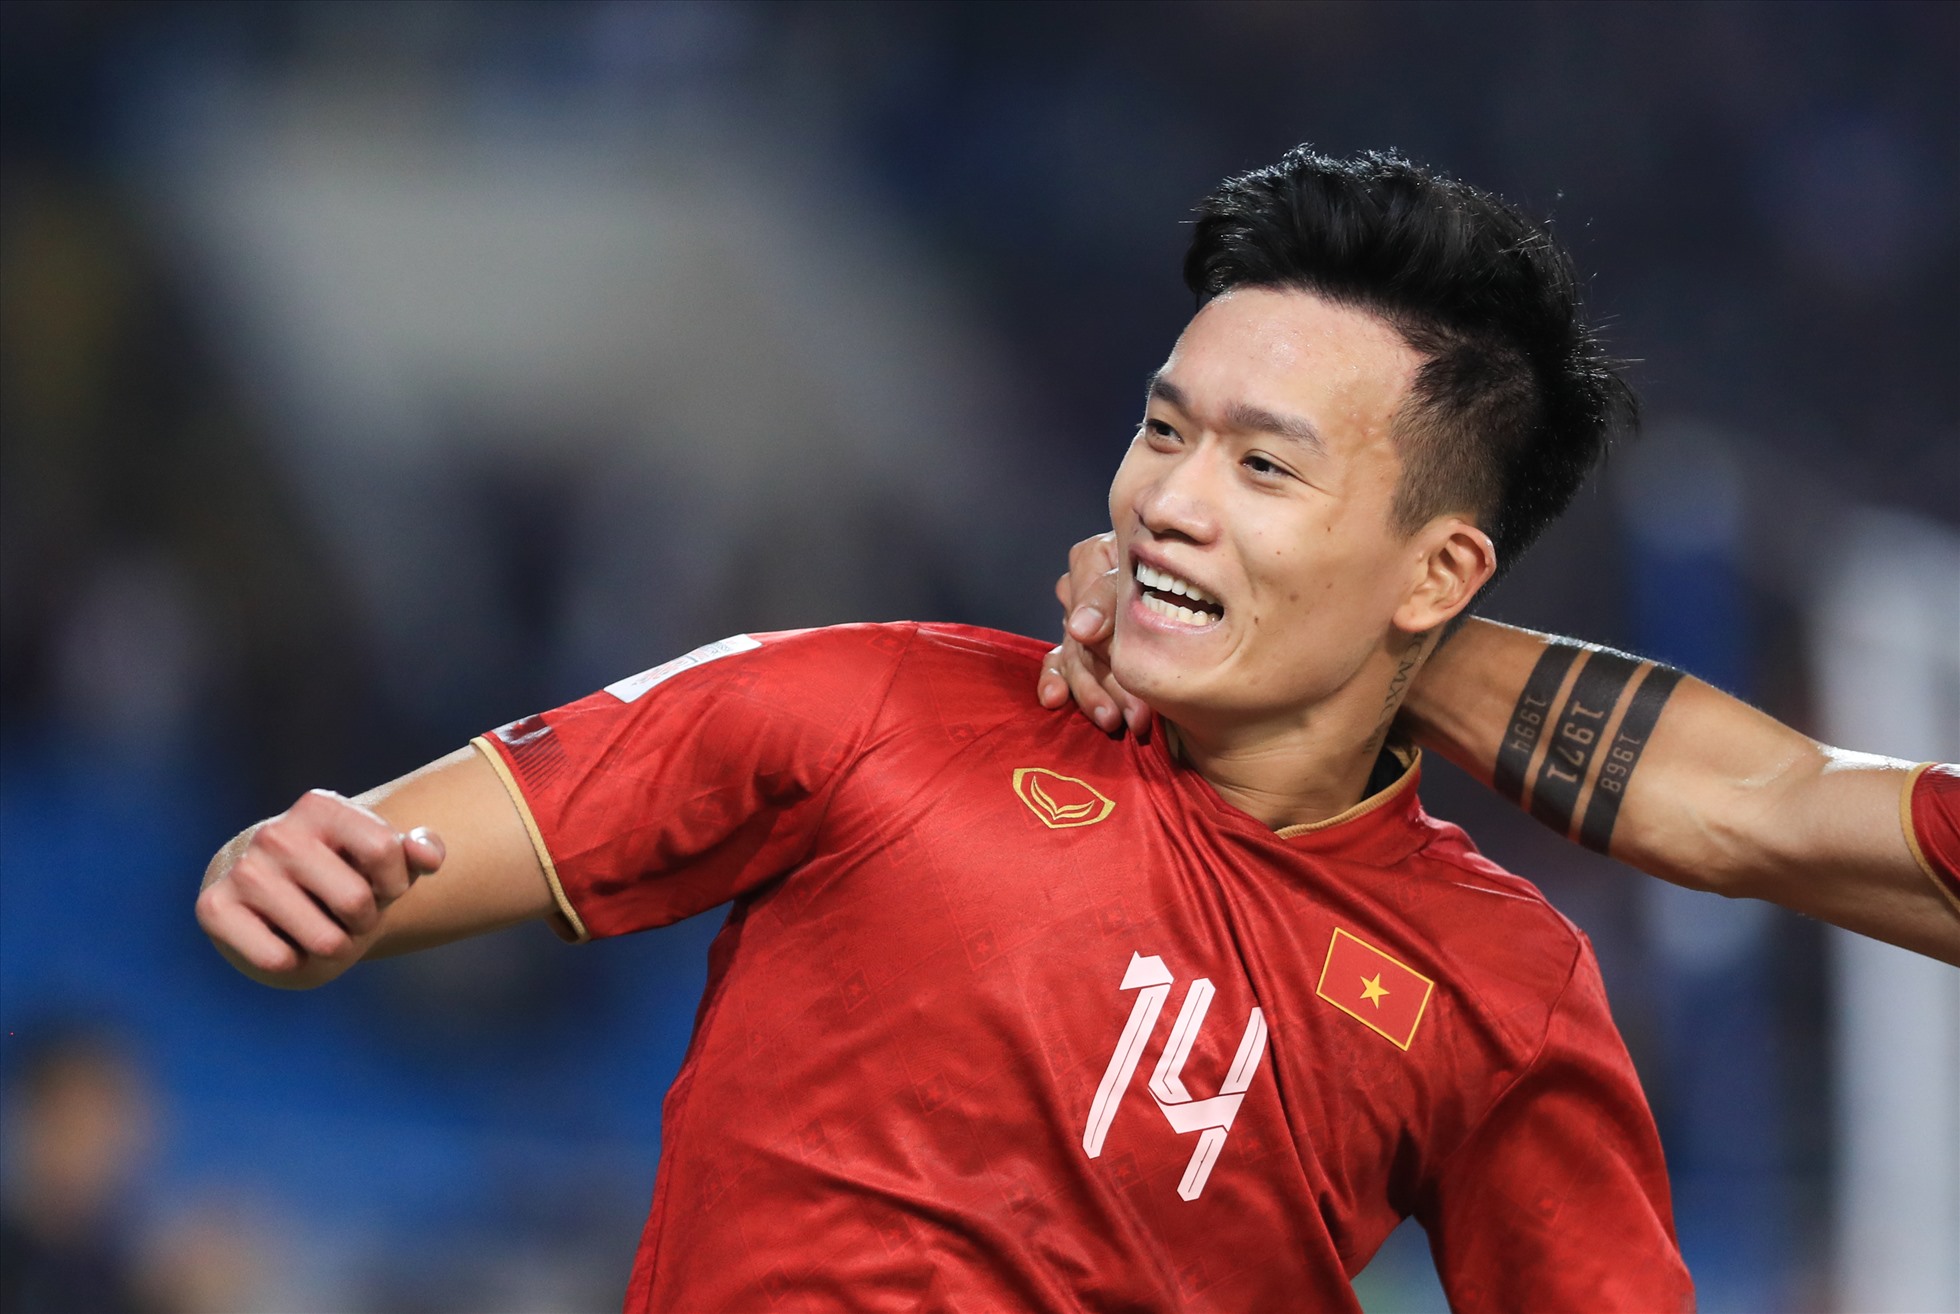 hau-aff-cup-2022-hoang-duc-nhan-2-the-vang-nhung-van-khong-bi-treo-gio